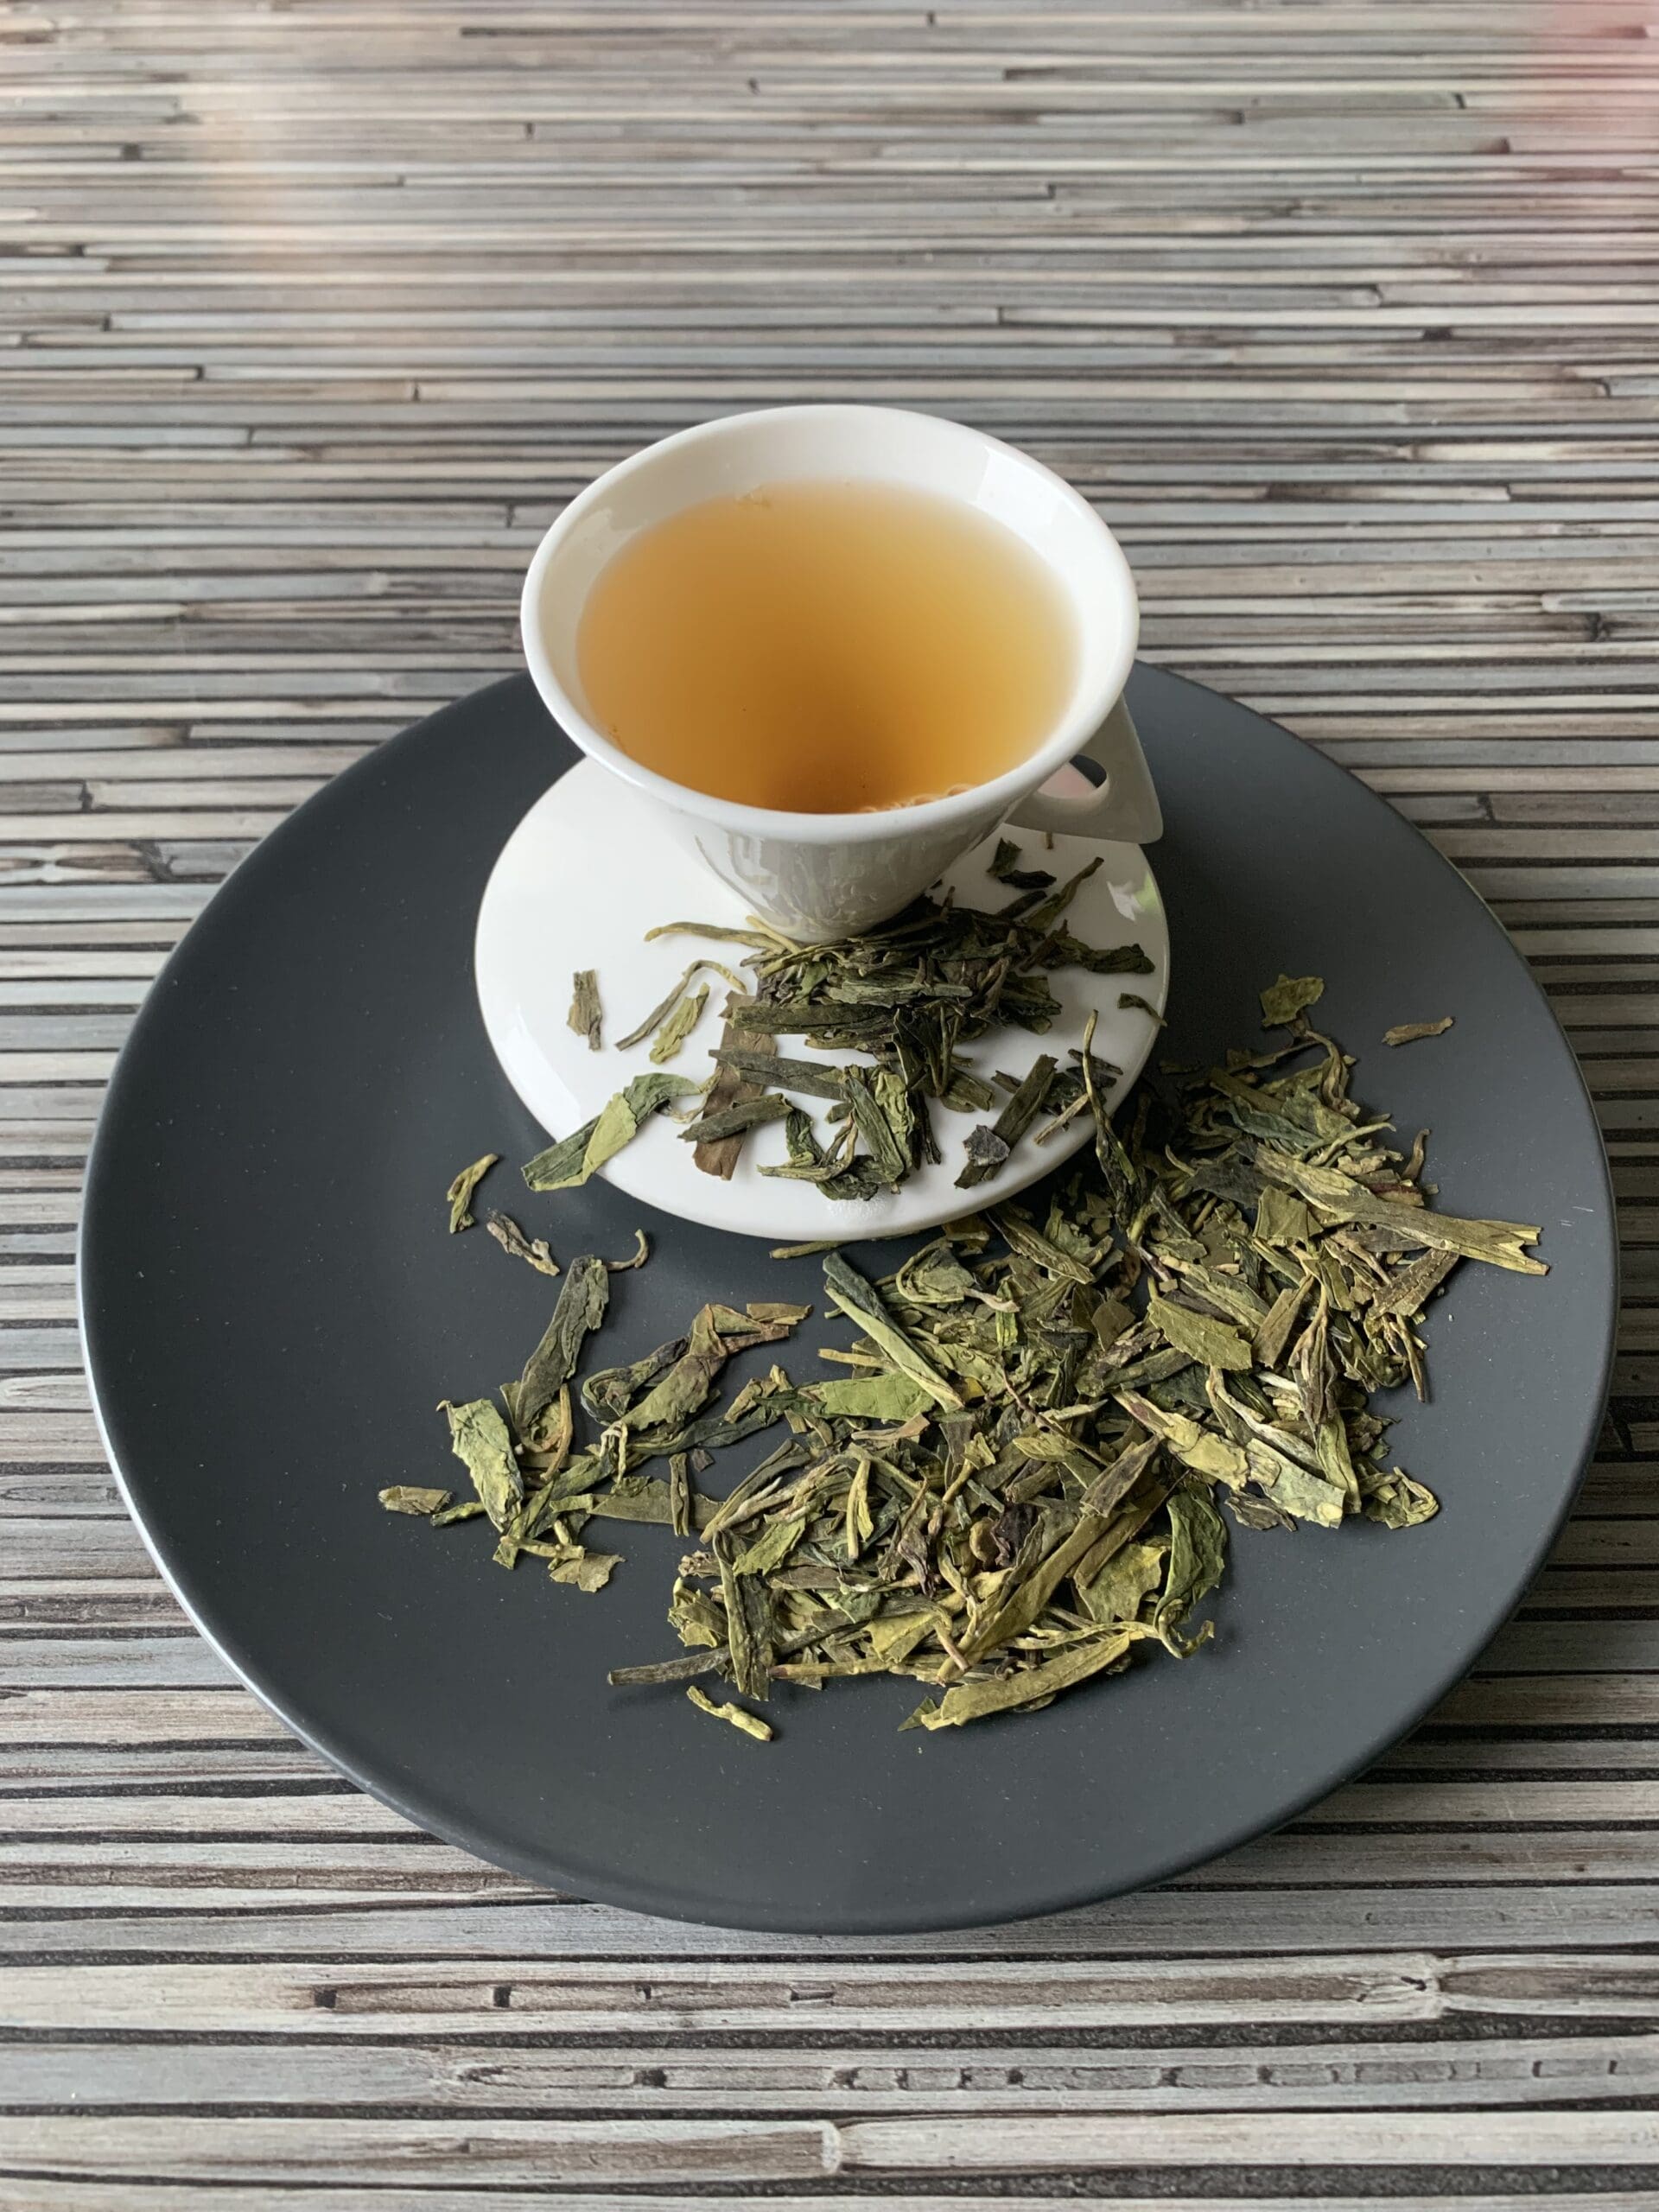 Grüner Tee China Lung Ching | Top Tee | Teesorte